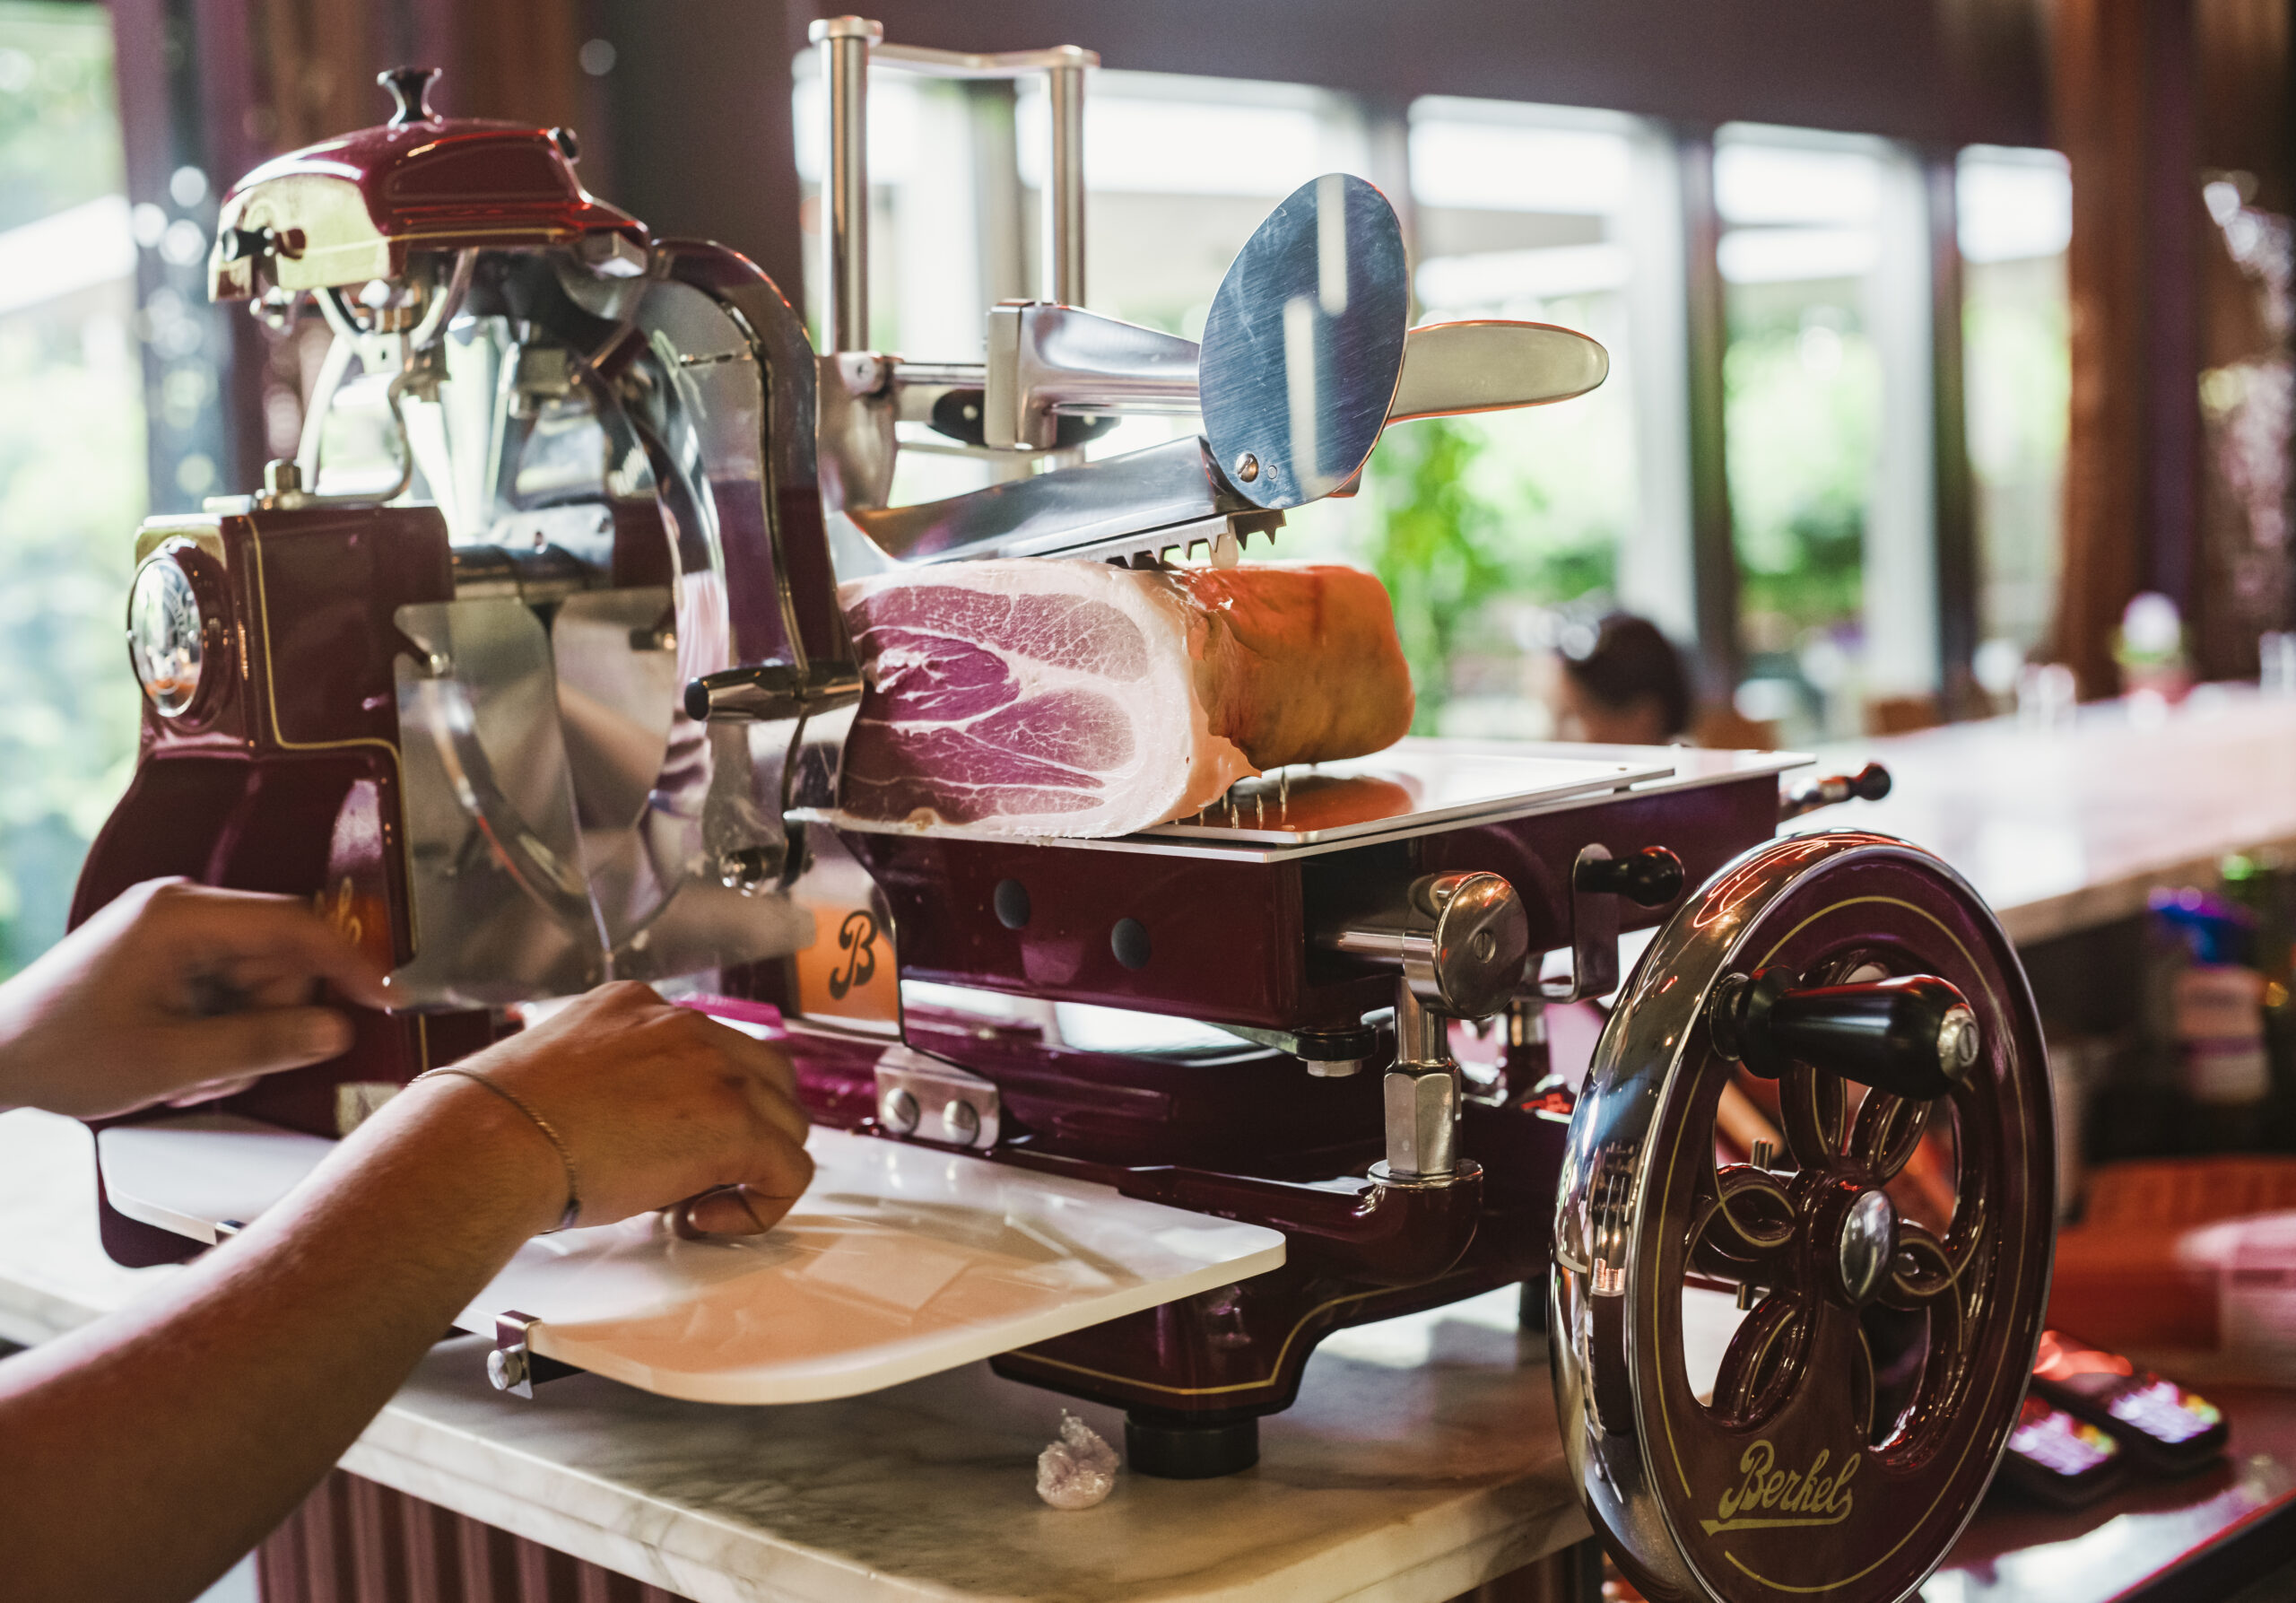 A Berkel slicing machine with a ham on it, slicing fresh ham in the RIBELLI restaurant